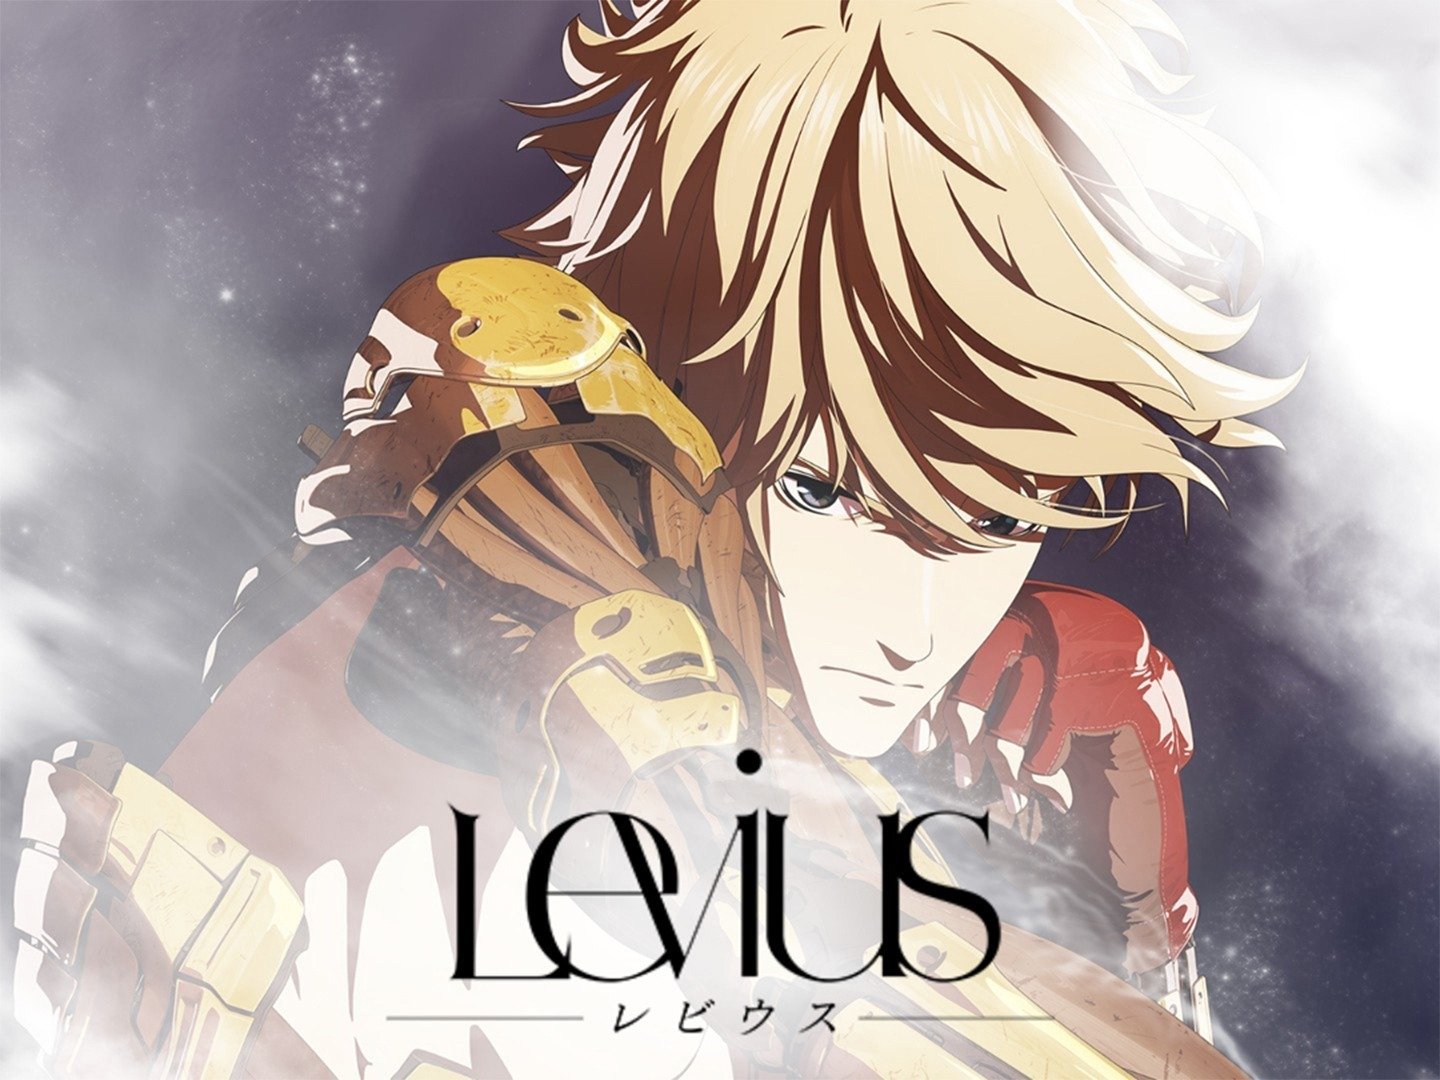 Levius (manga) - Wikipedia